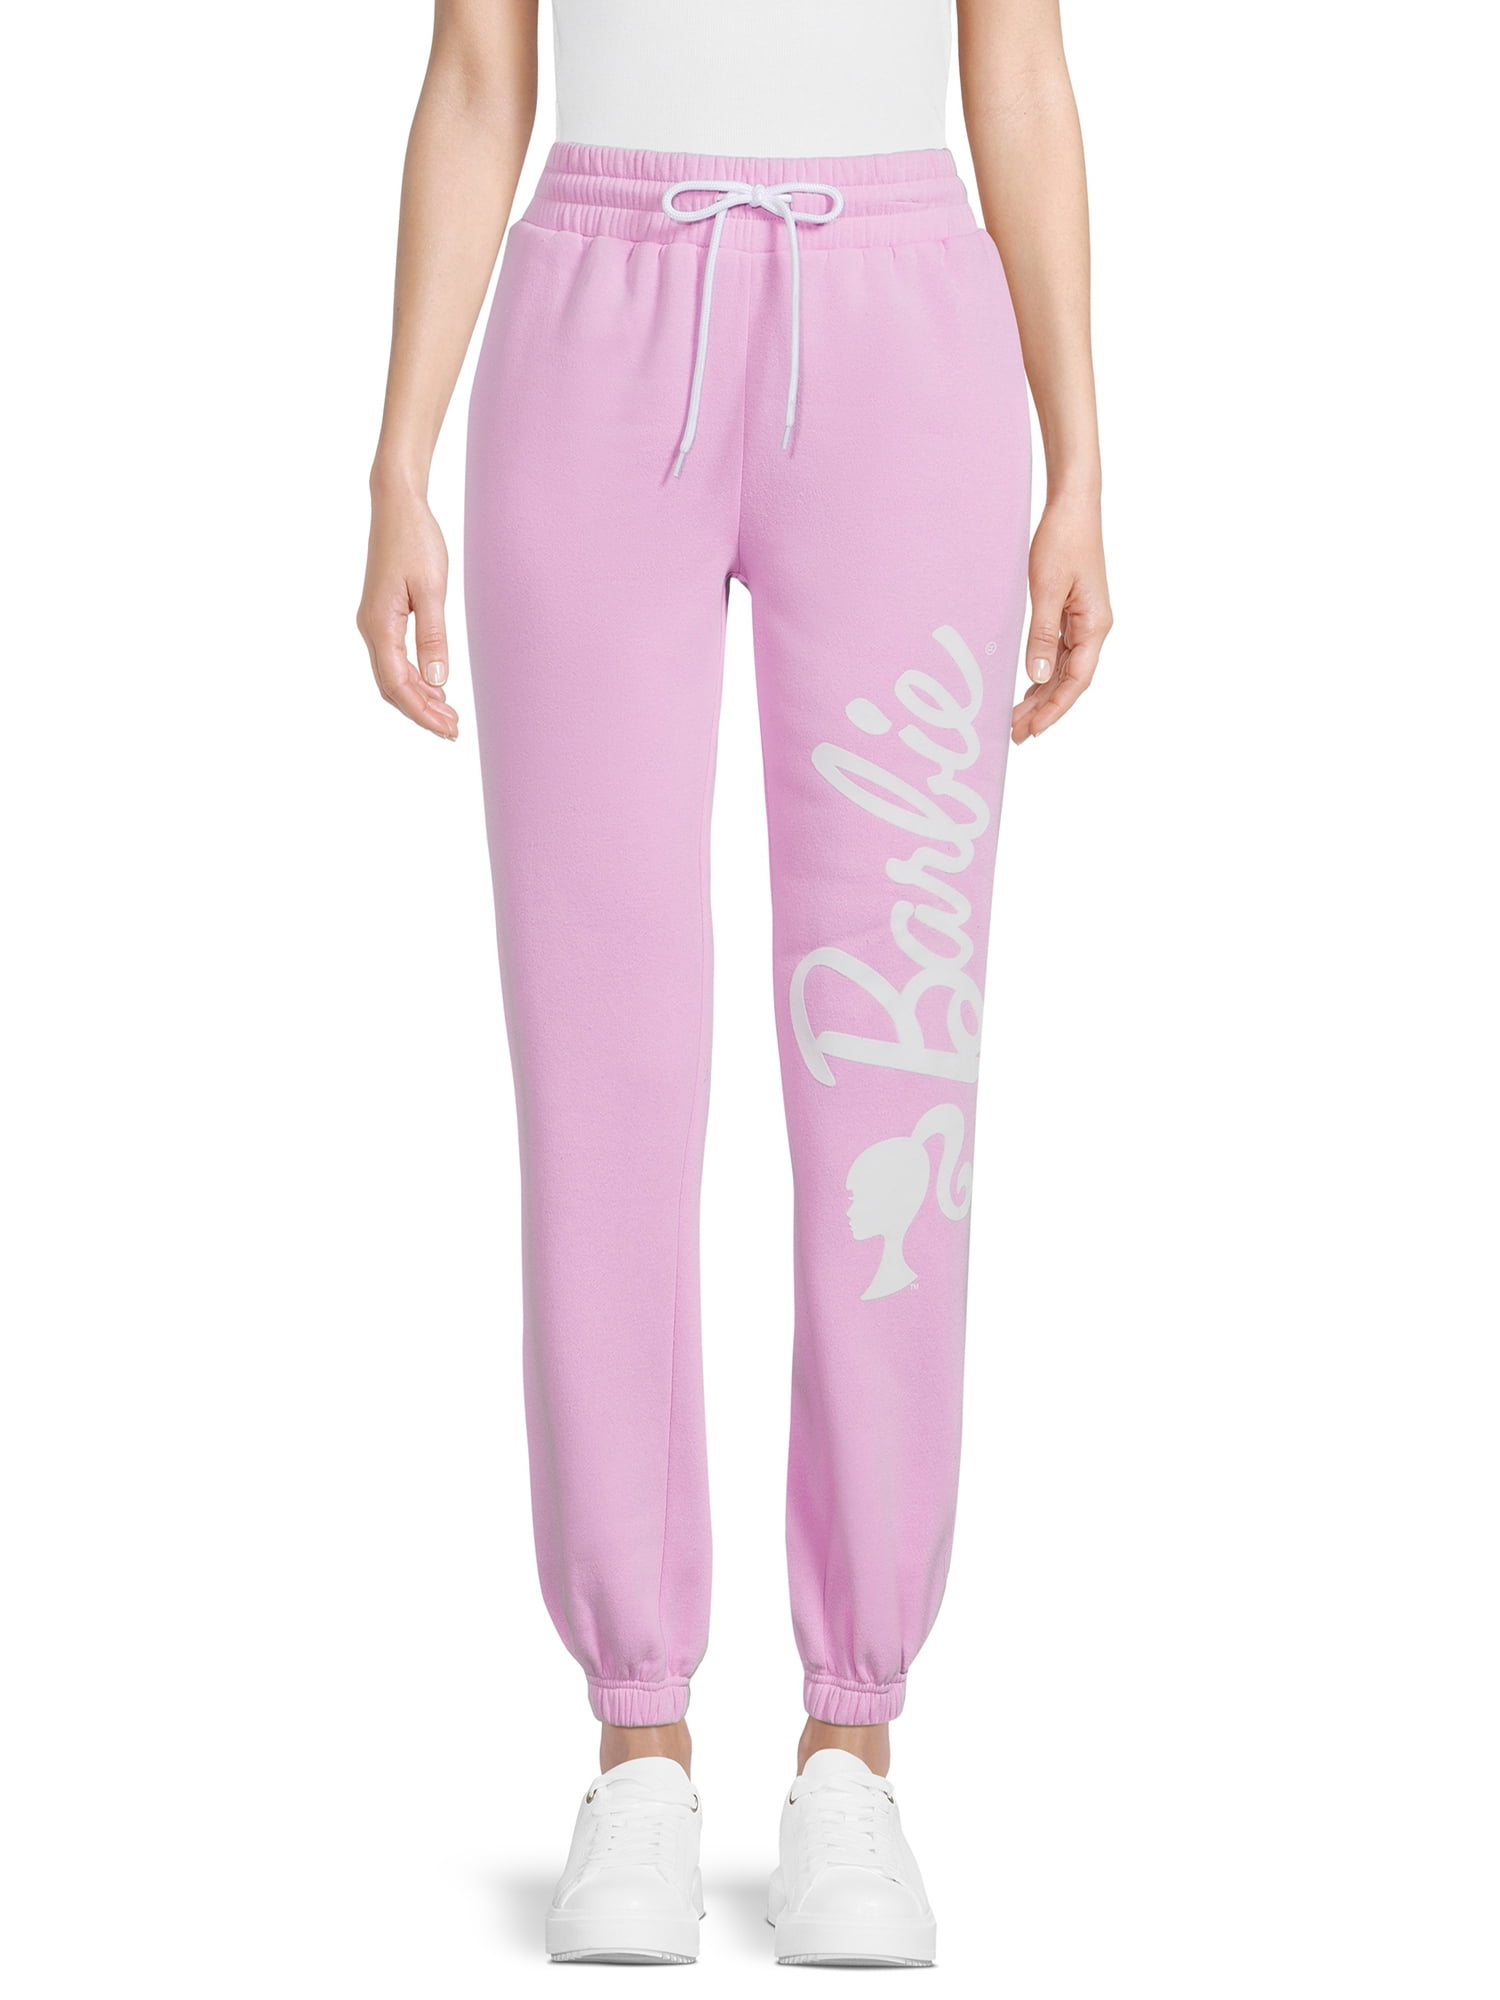 Whlbf Clearance Barbiepink Pants for Women Sports Trousers Jogging  SweatPants